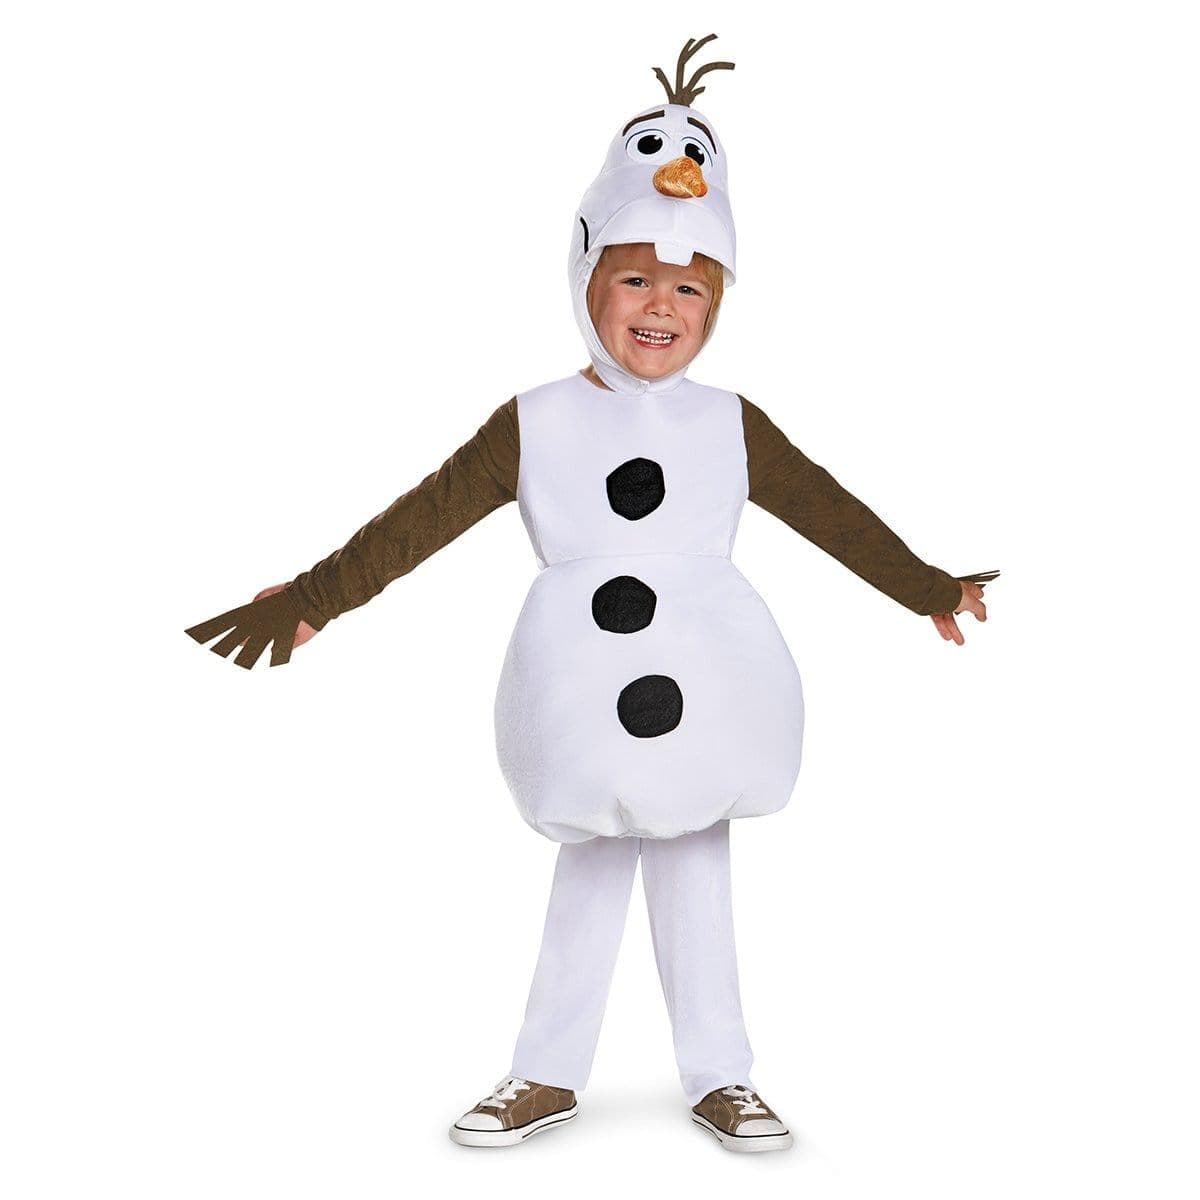 Costume Robe La Reine des Neiges Joyeuses Fêtes avec Olaf Enfant